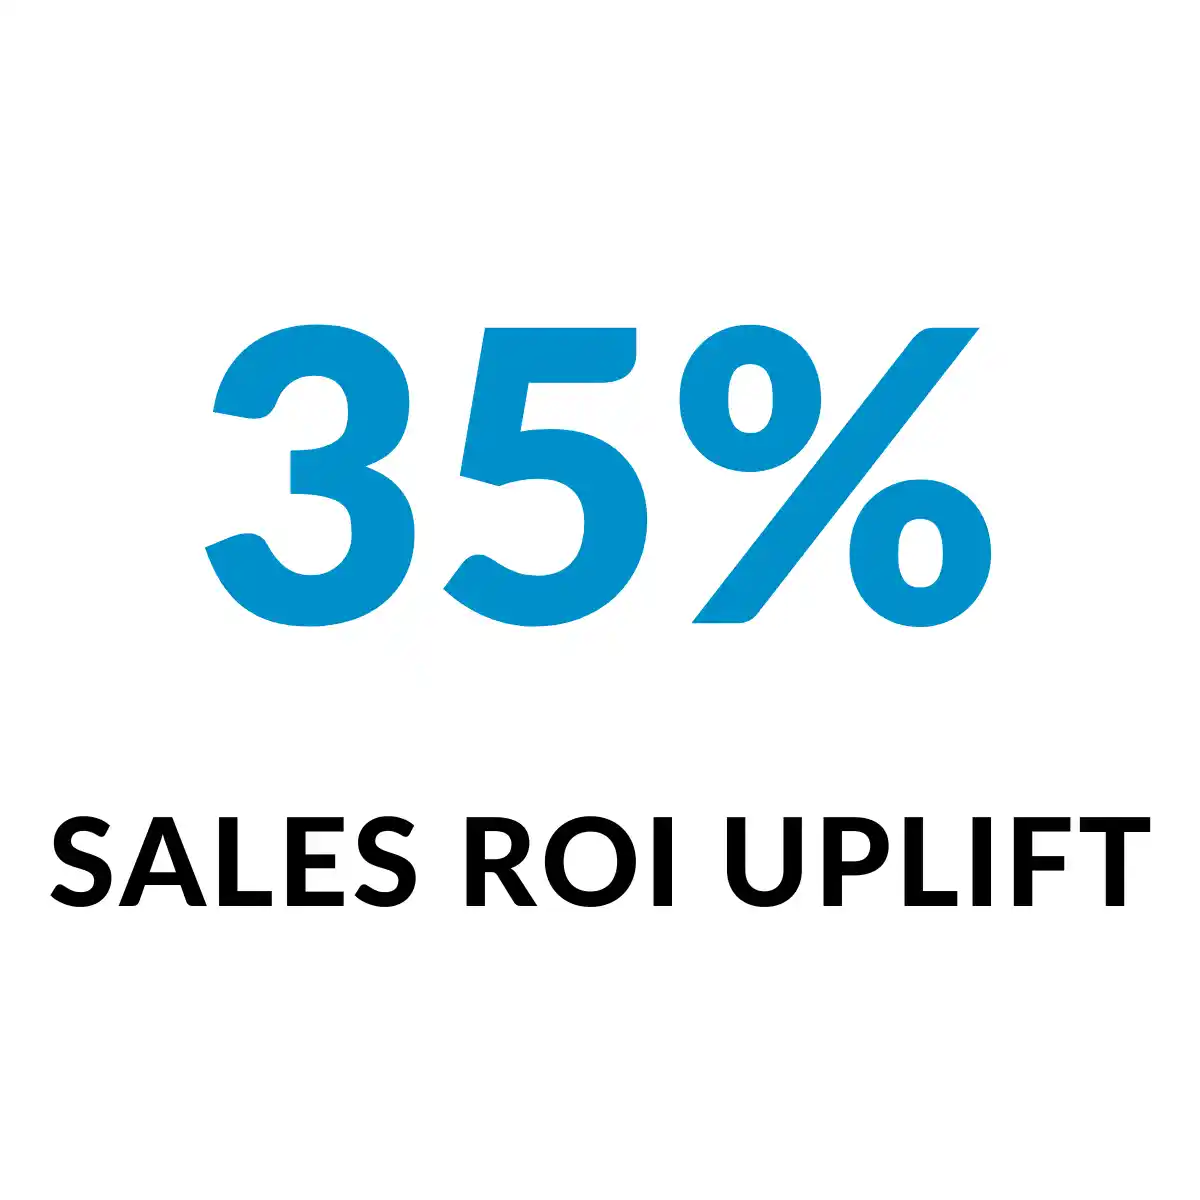 35% sales uplift